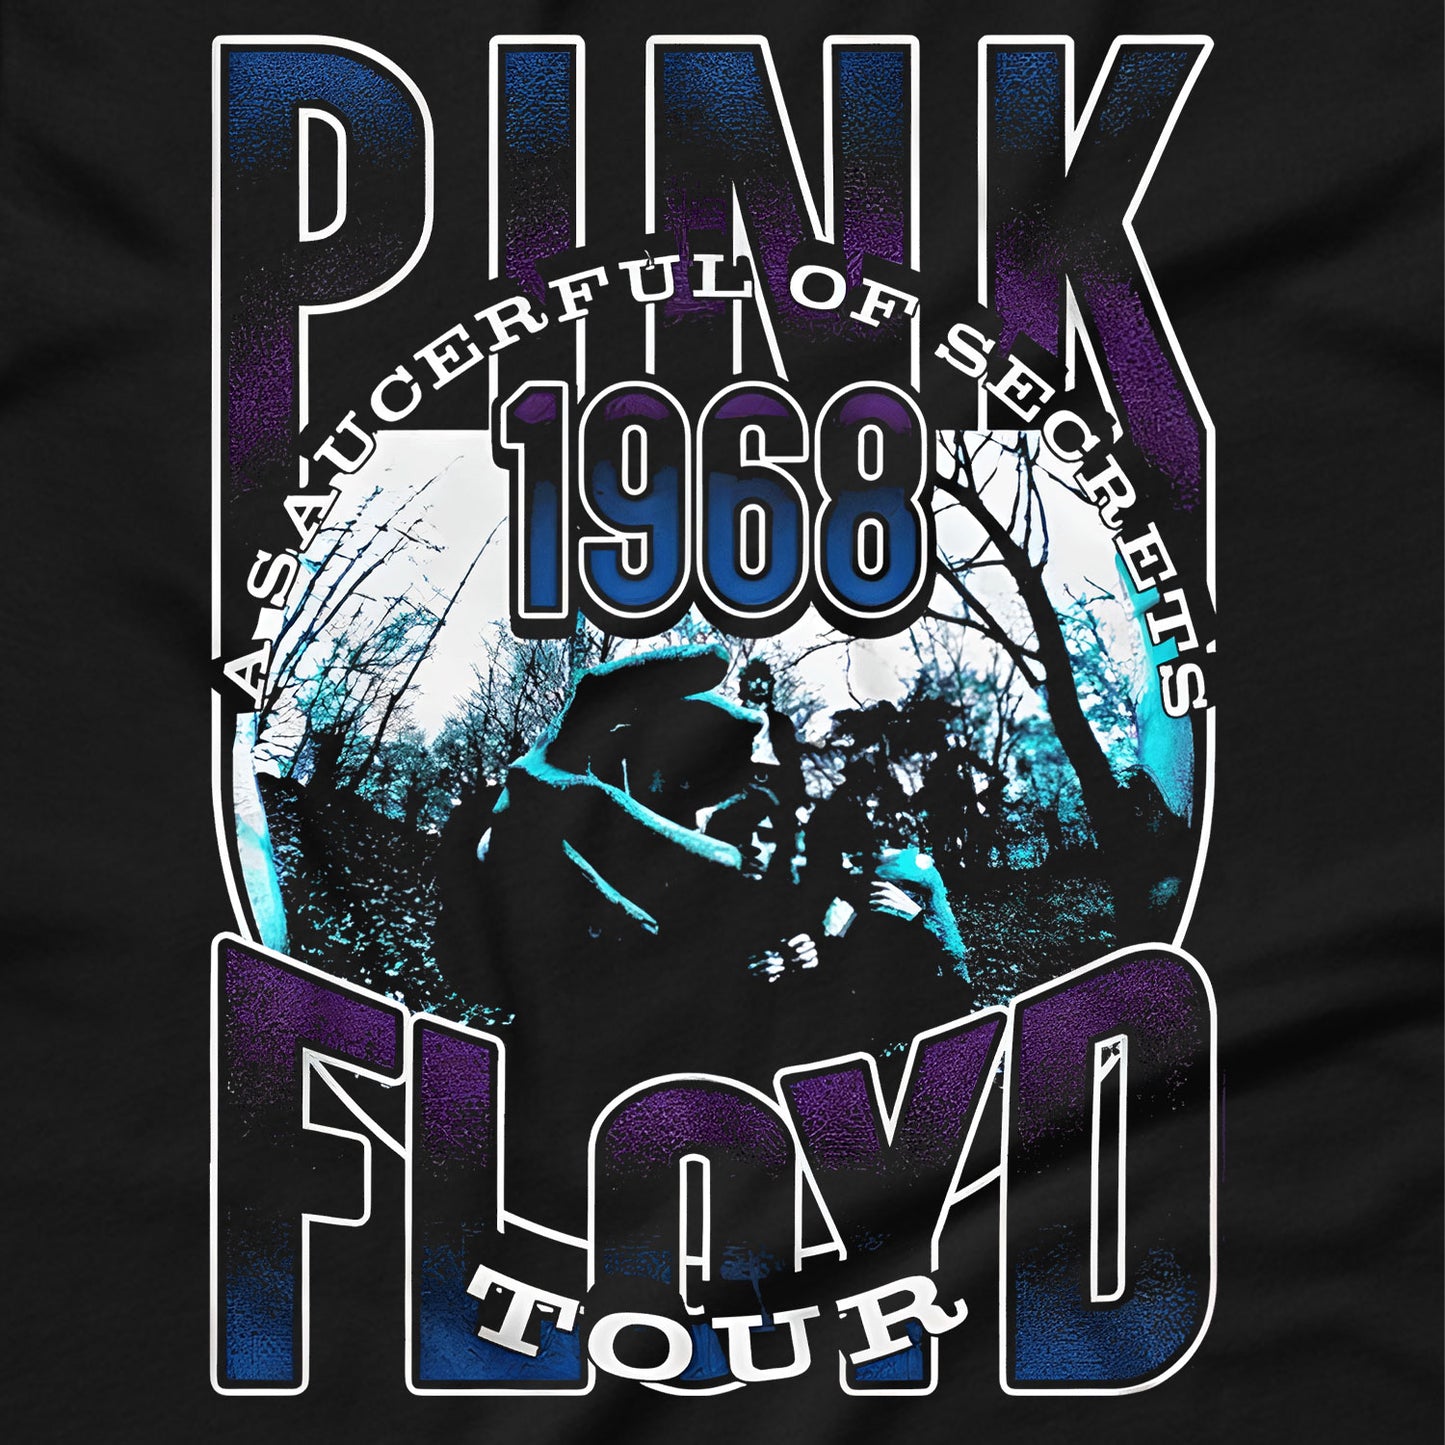 Pink Floyd - Special 68' Tour T-Shirt